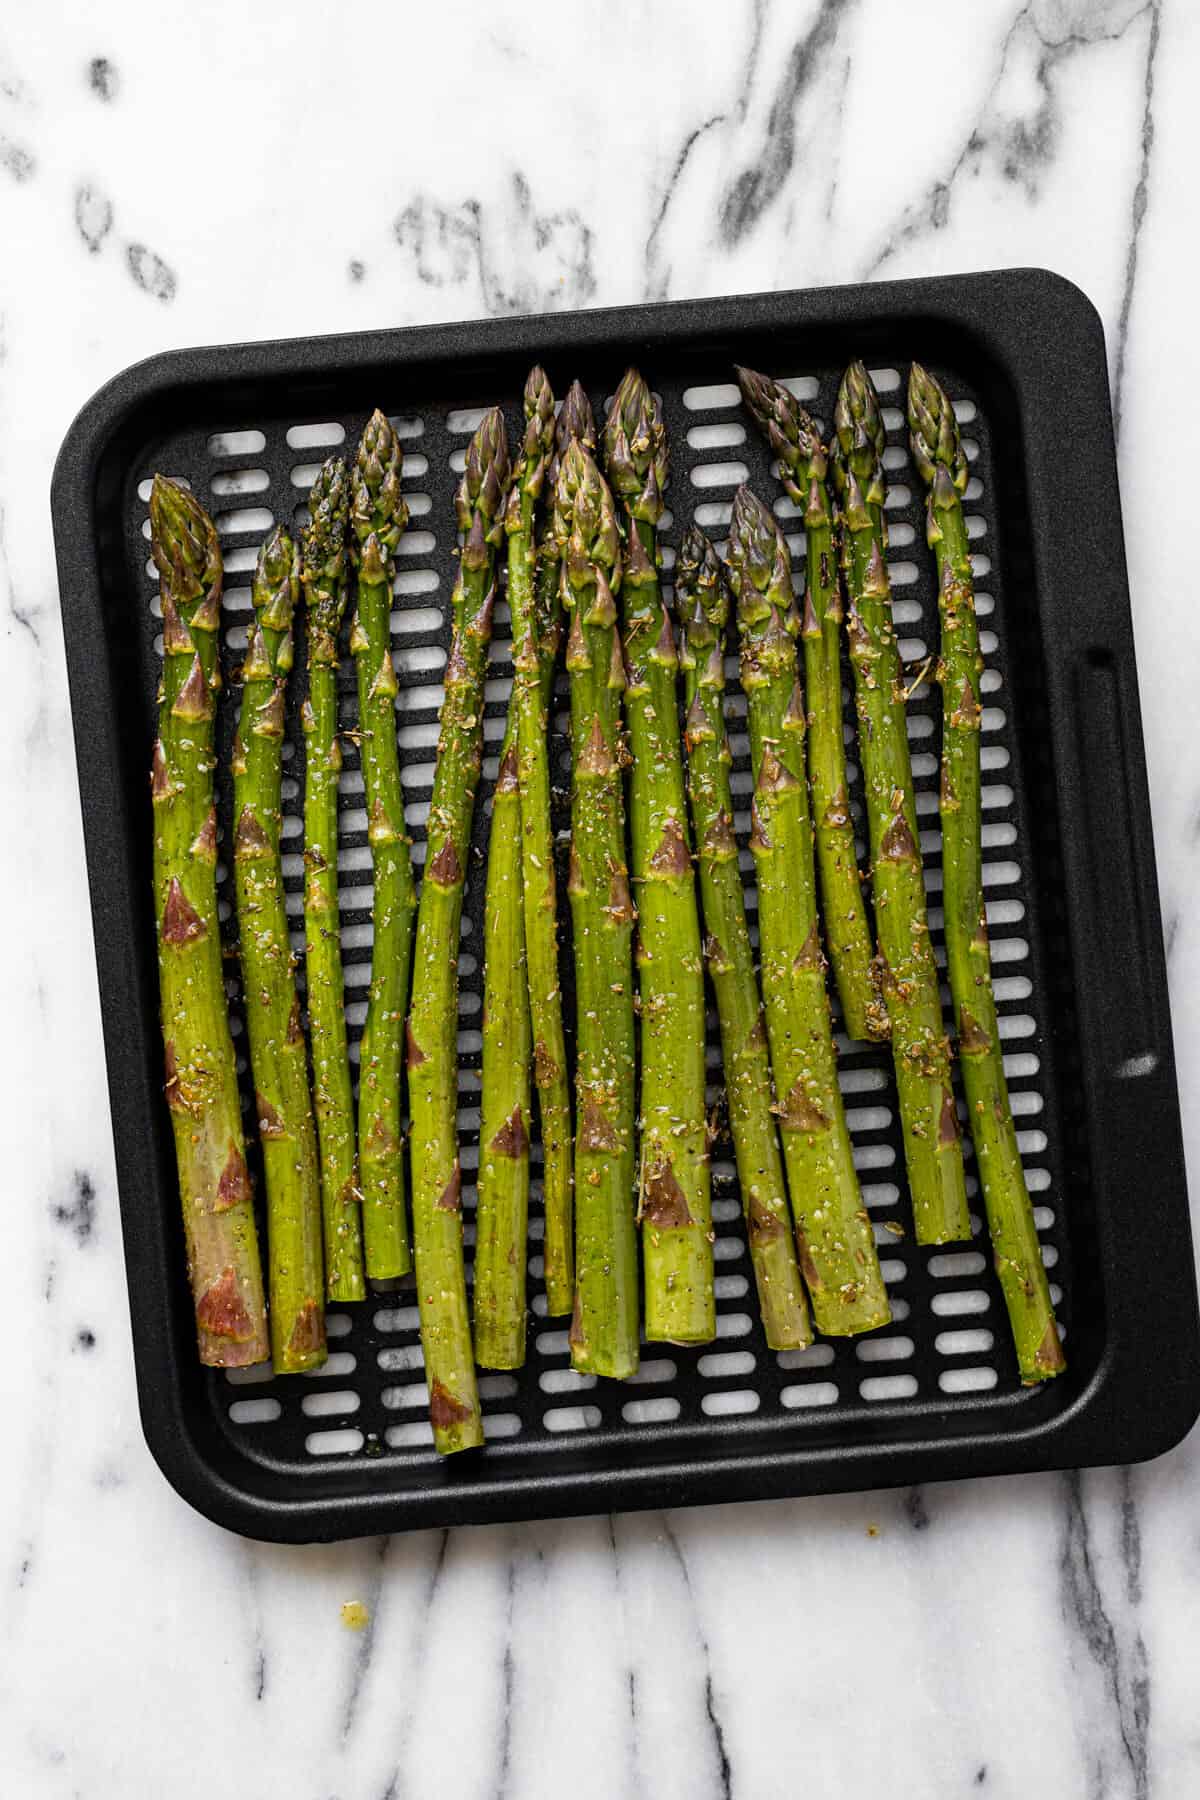 Seasoned asparagus spears on a black air frying tray